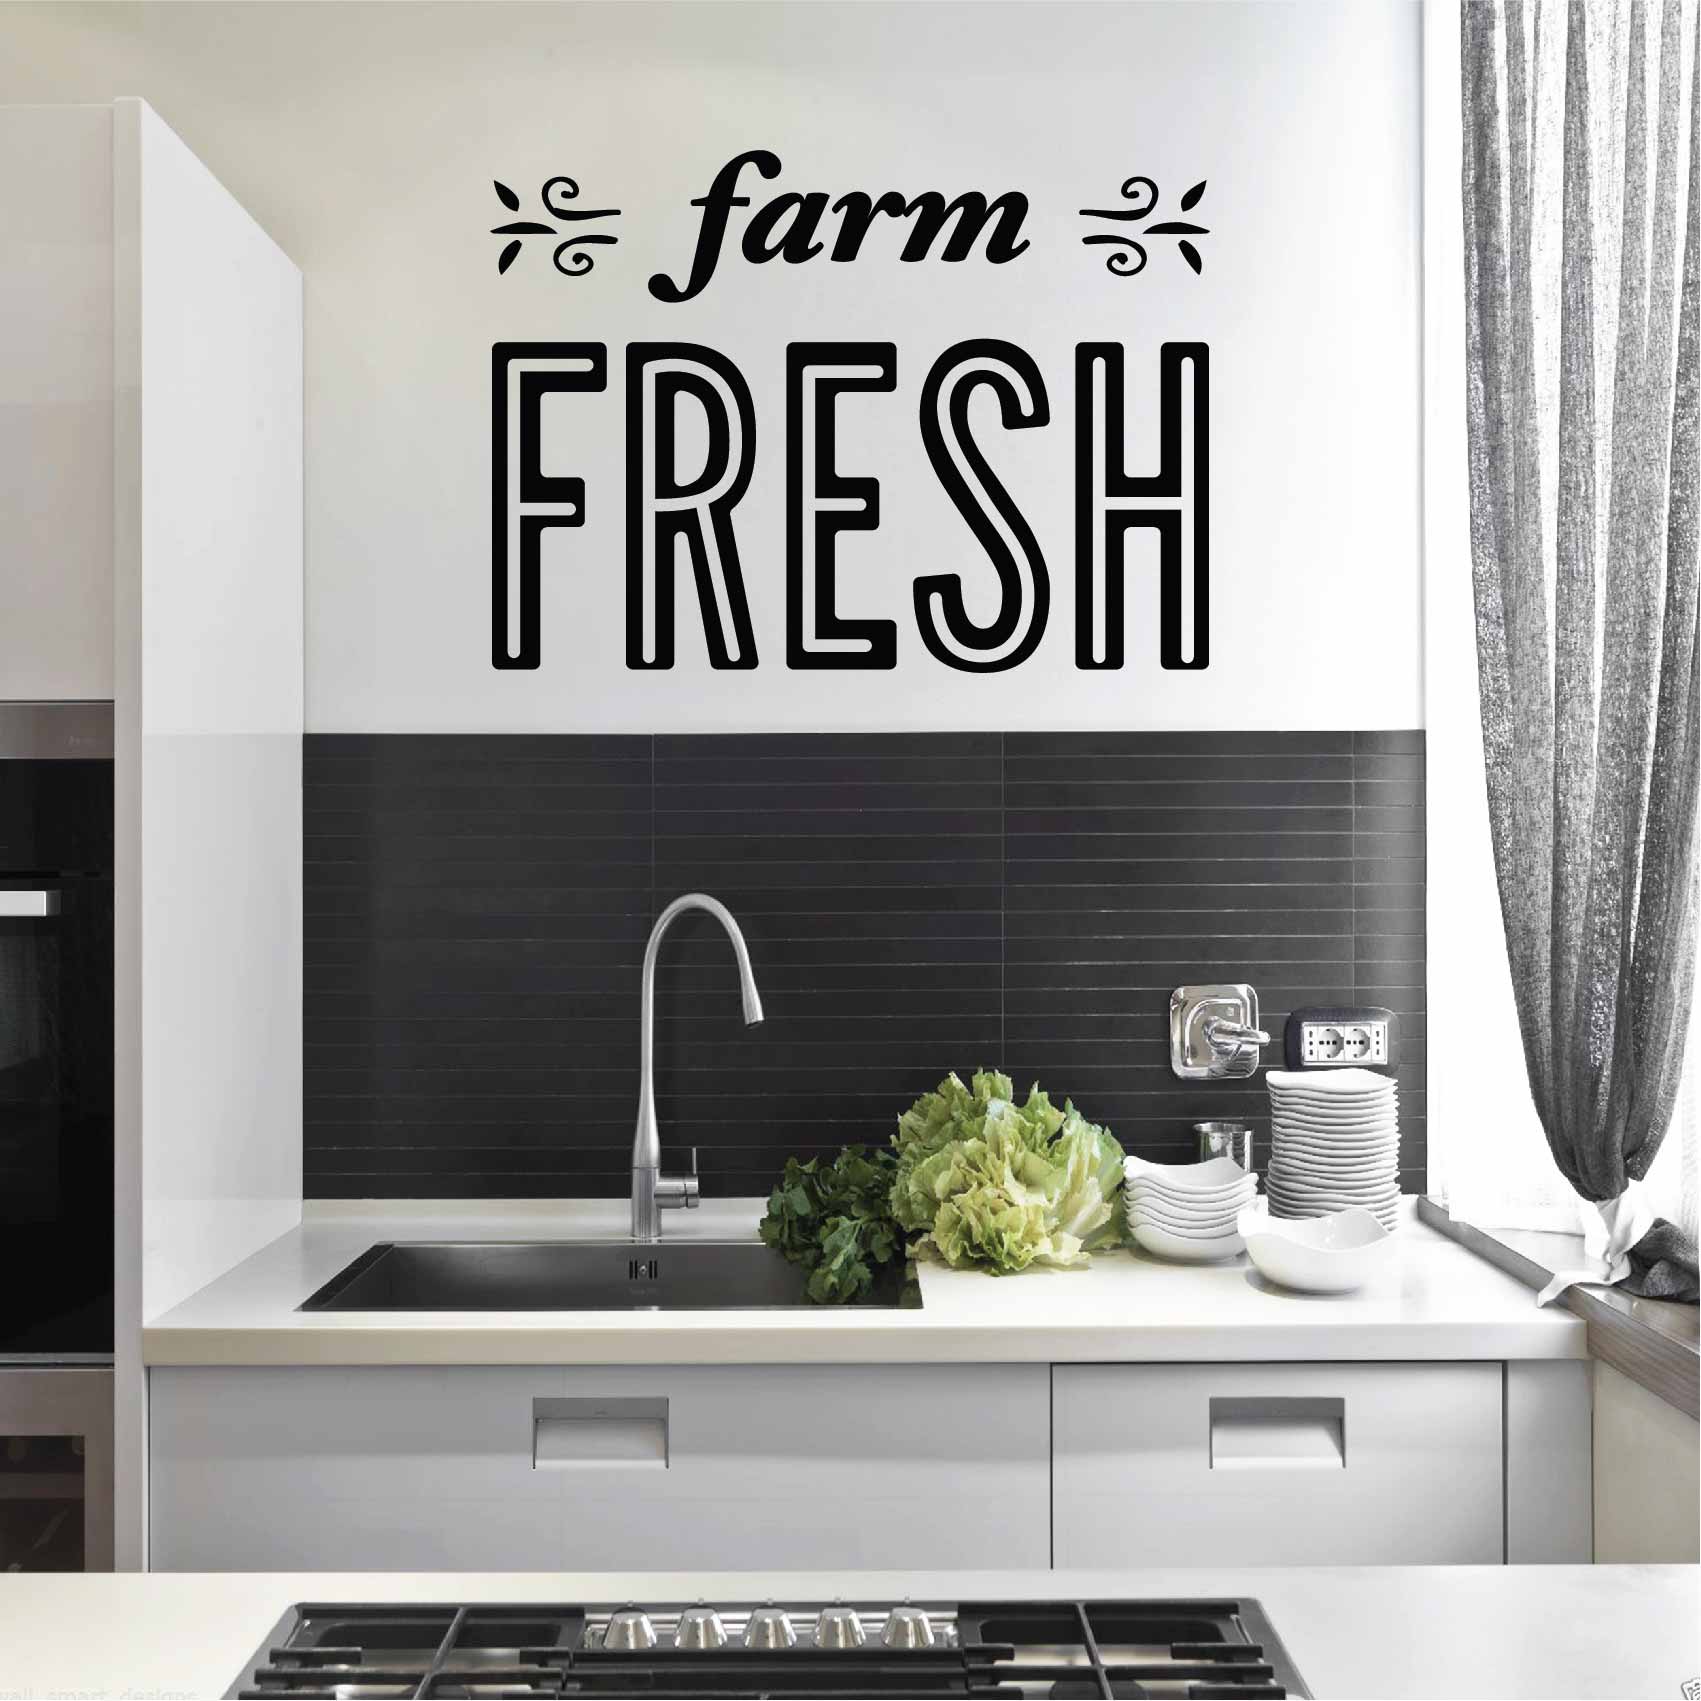 stickers-farm-fresh-ref34cuisine-stickers-muraux-cuisine-autocollant-deco-cuisine-chambre-salon-sticker-mural-cuisine-decoration